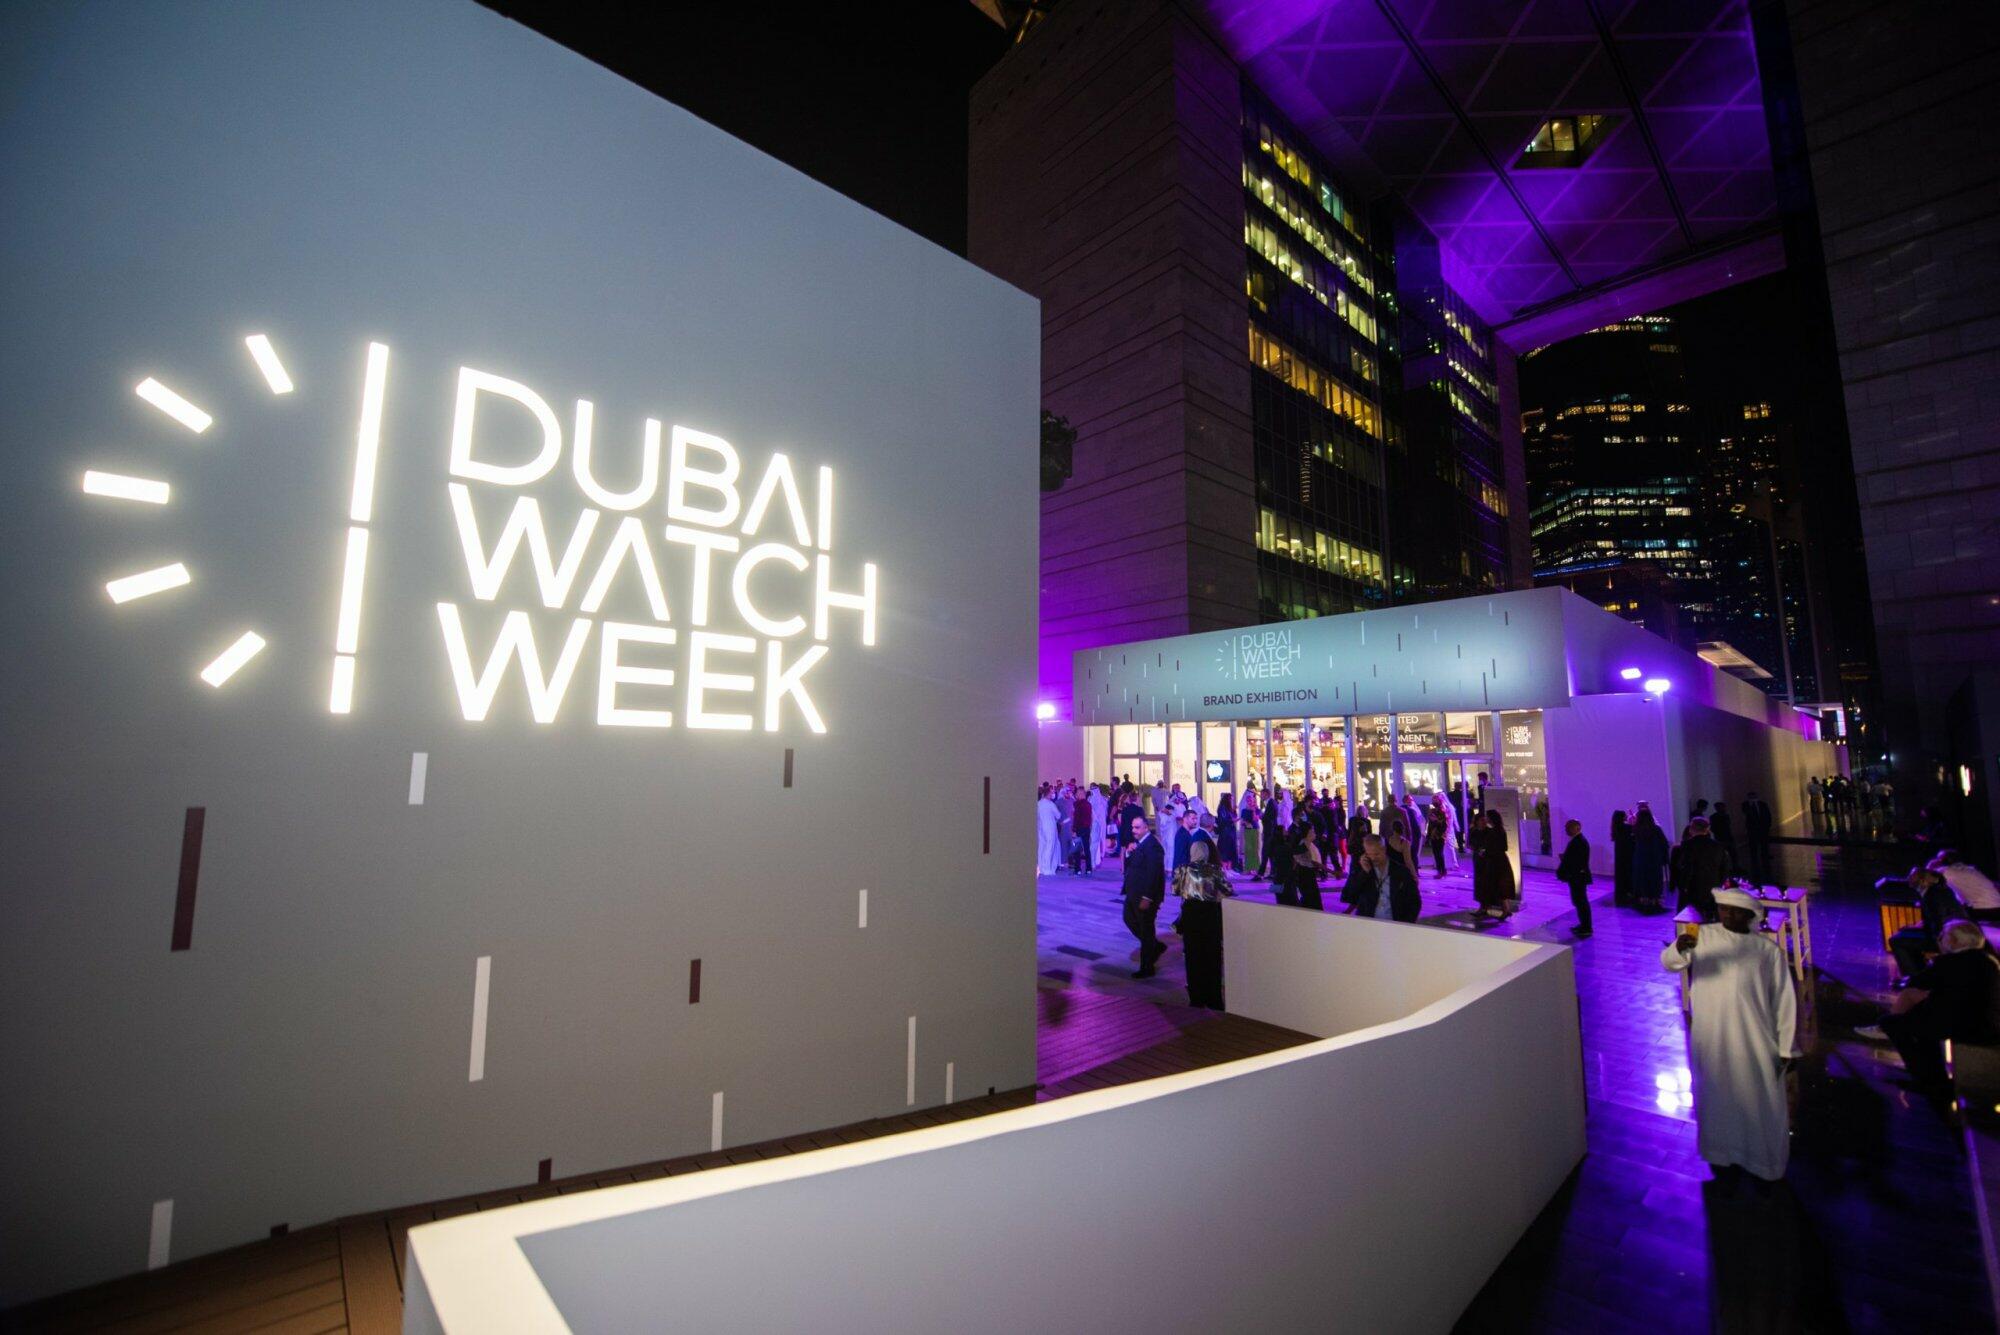 Dubai Watch Week – A watch lover’s paradise